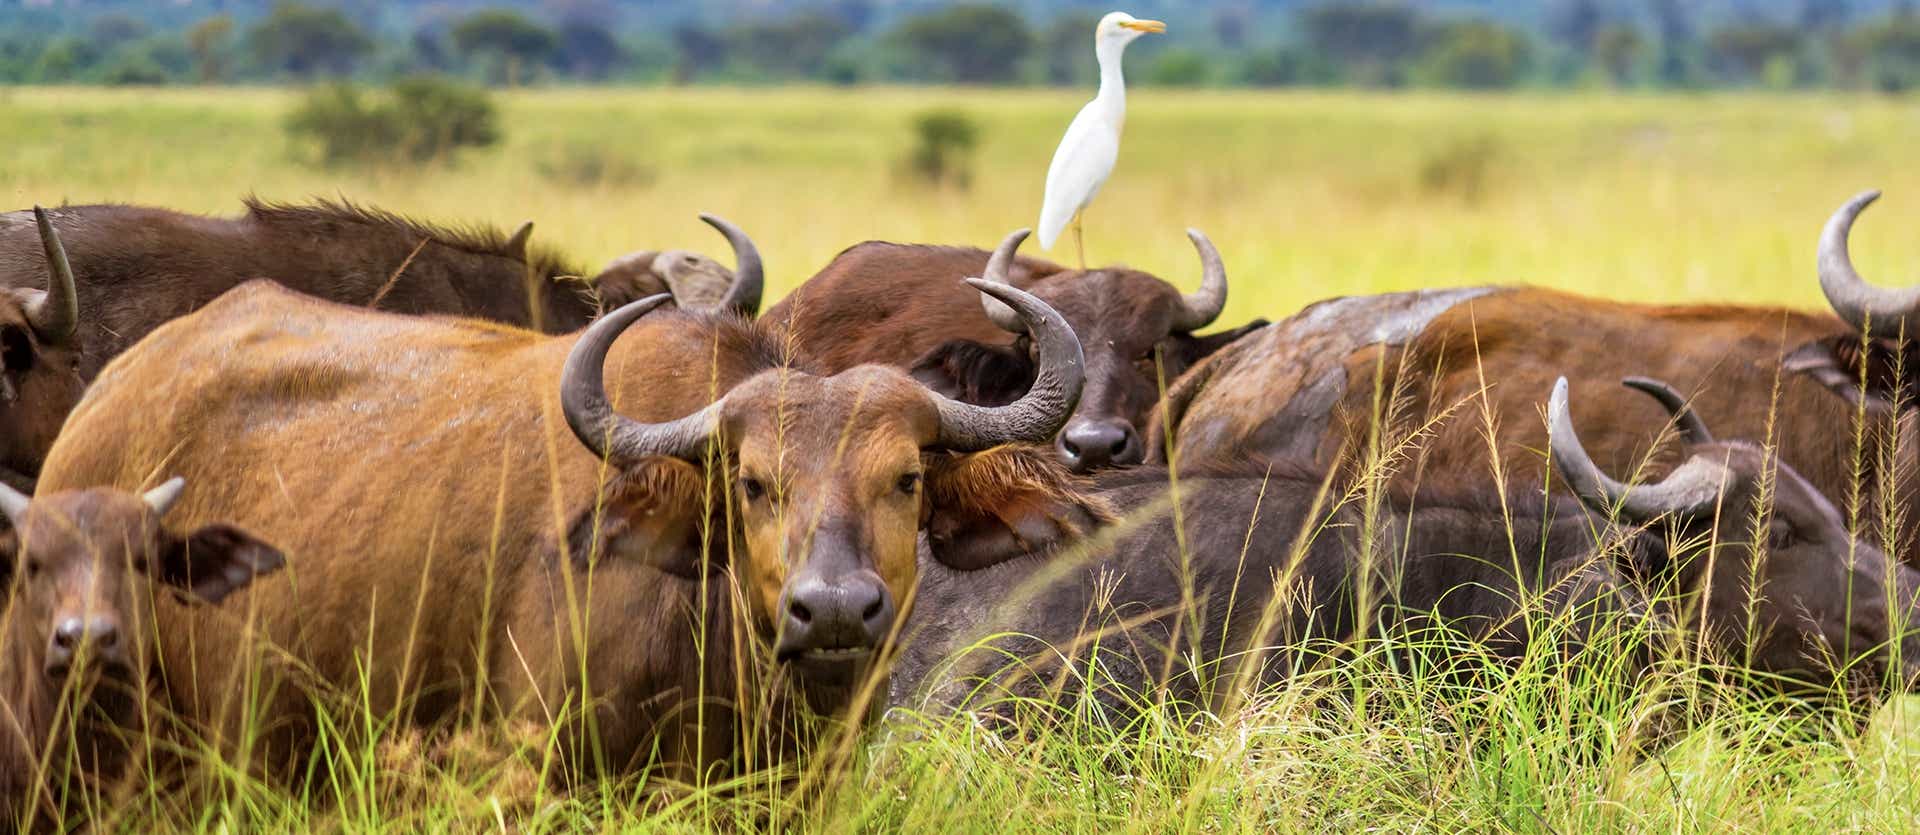 Manada de búfalos <span class="iconos separador"></span> Parque Nacional Queen Elisabeth <span class="iconos separador"></span> Uganda